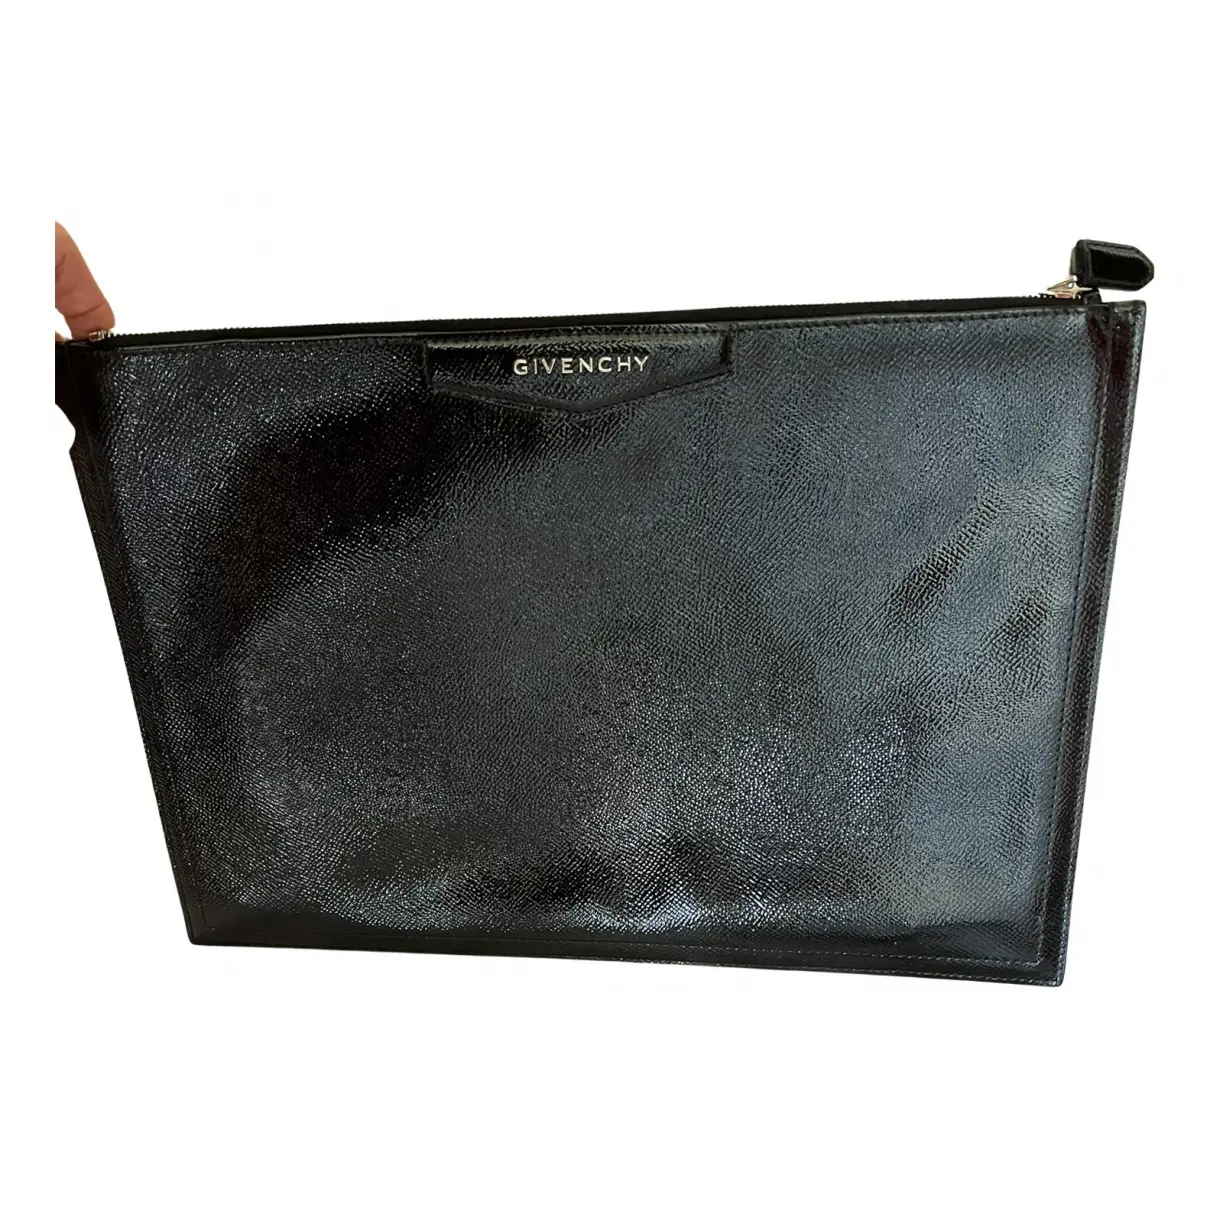 Buy Givenchy Antigona patent leather clutch bag online